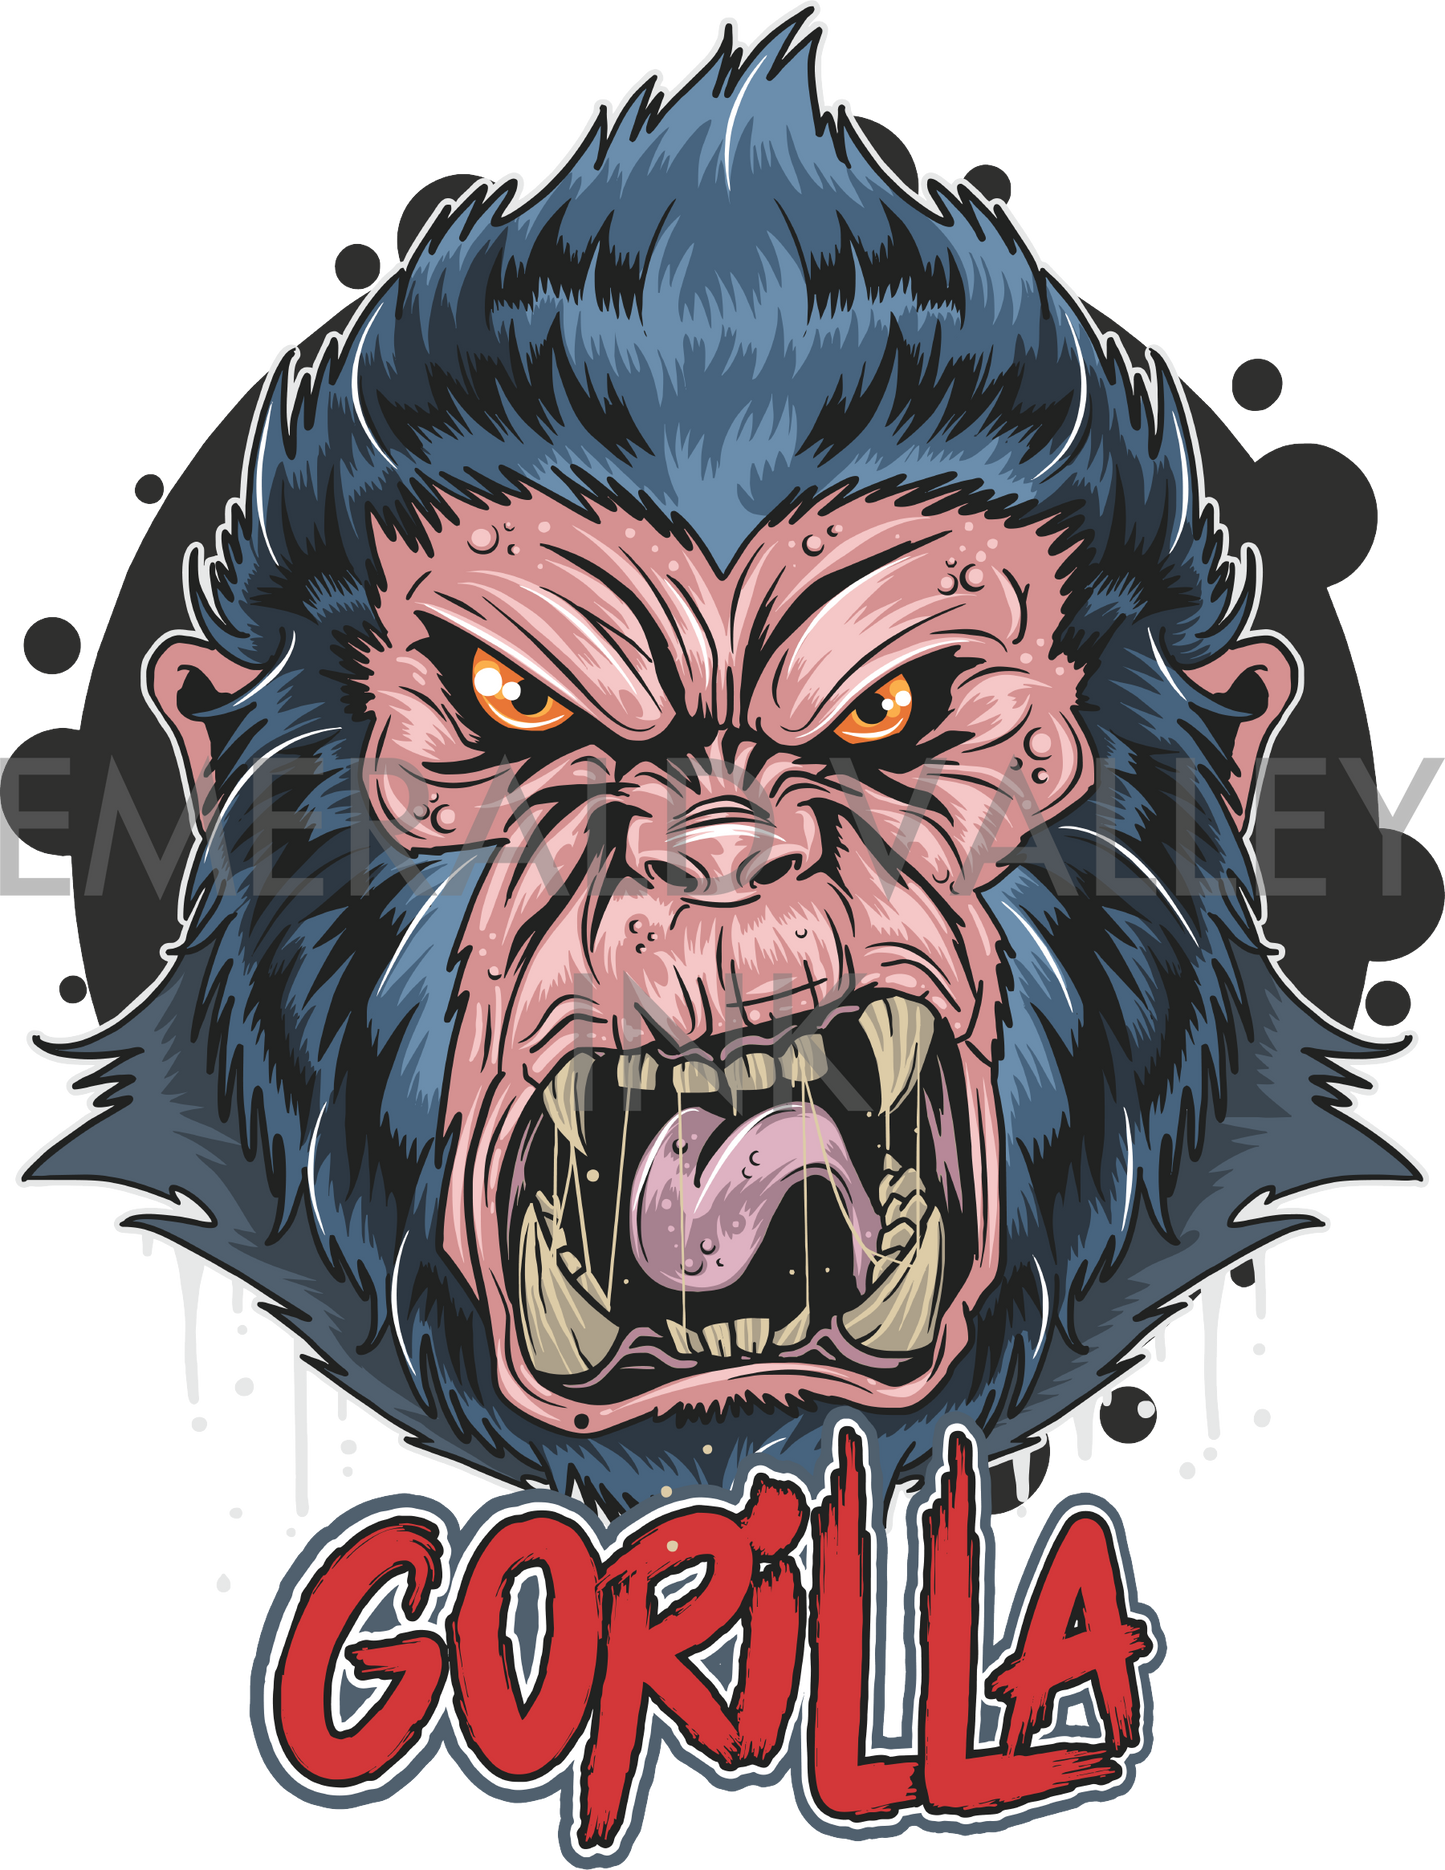 Angry Gorilla Head